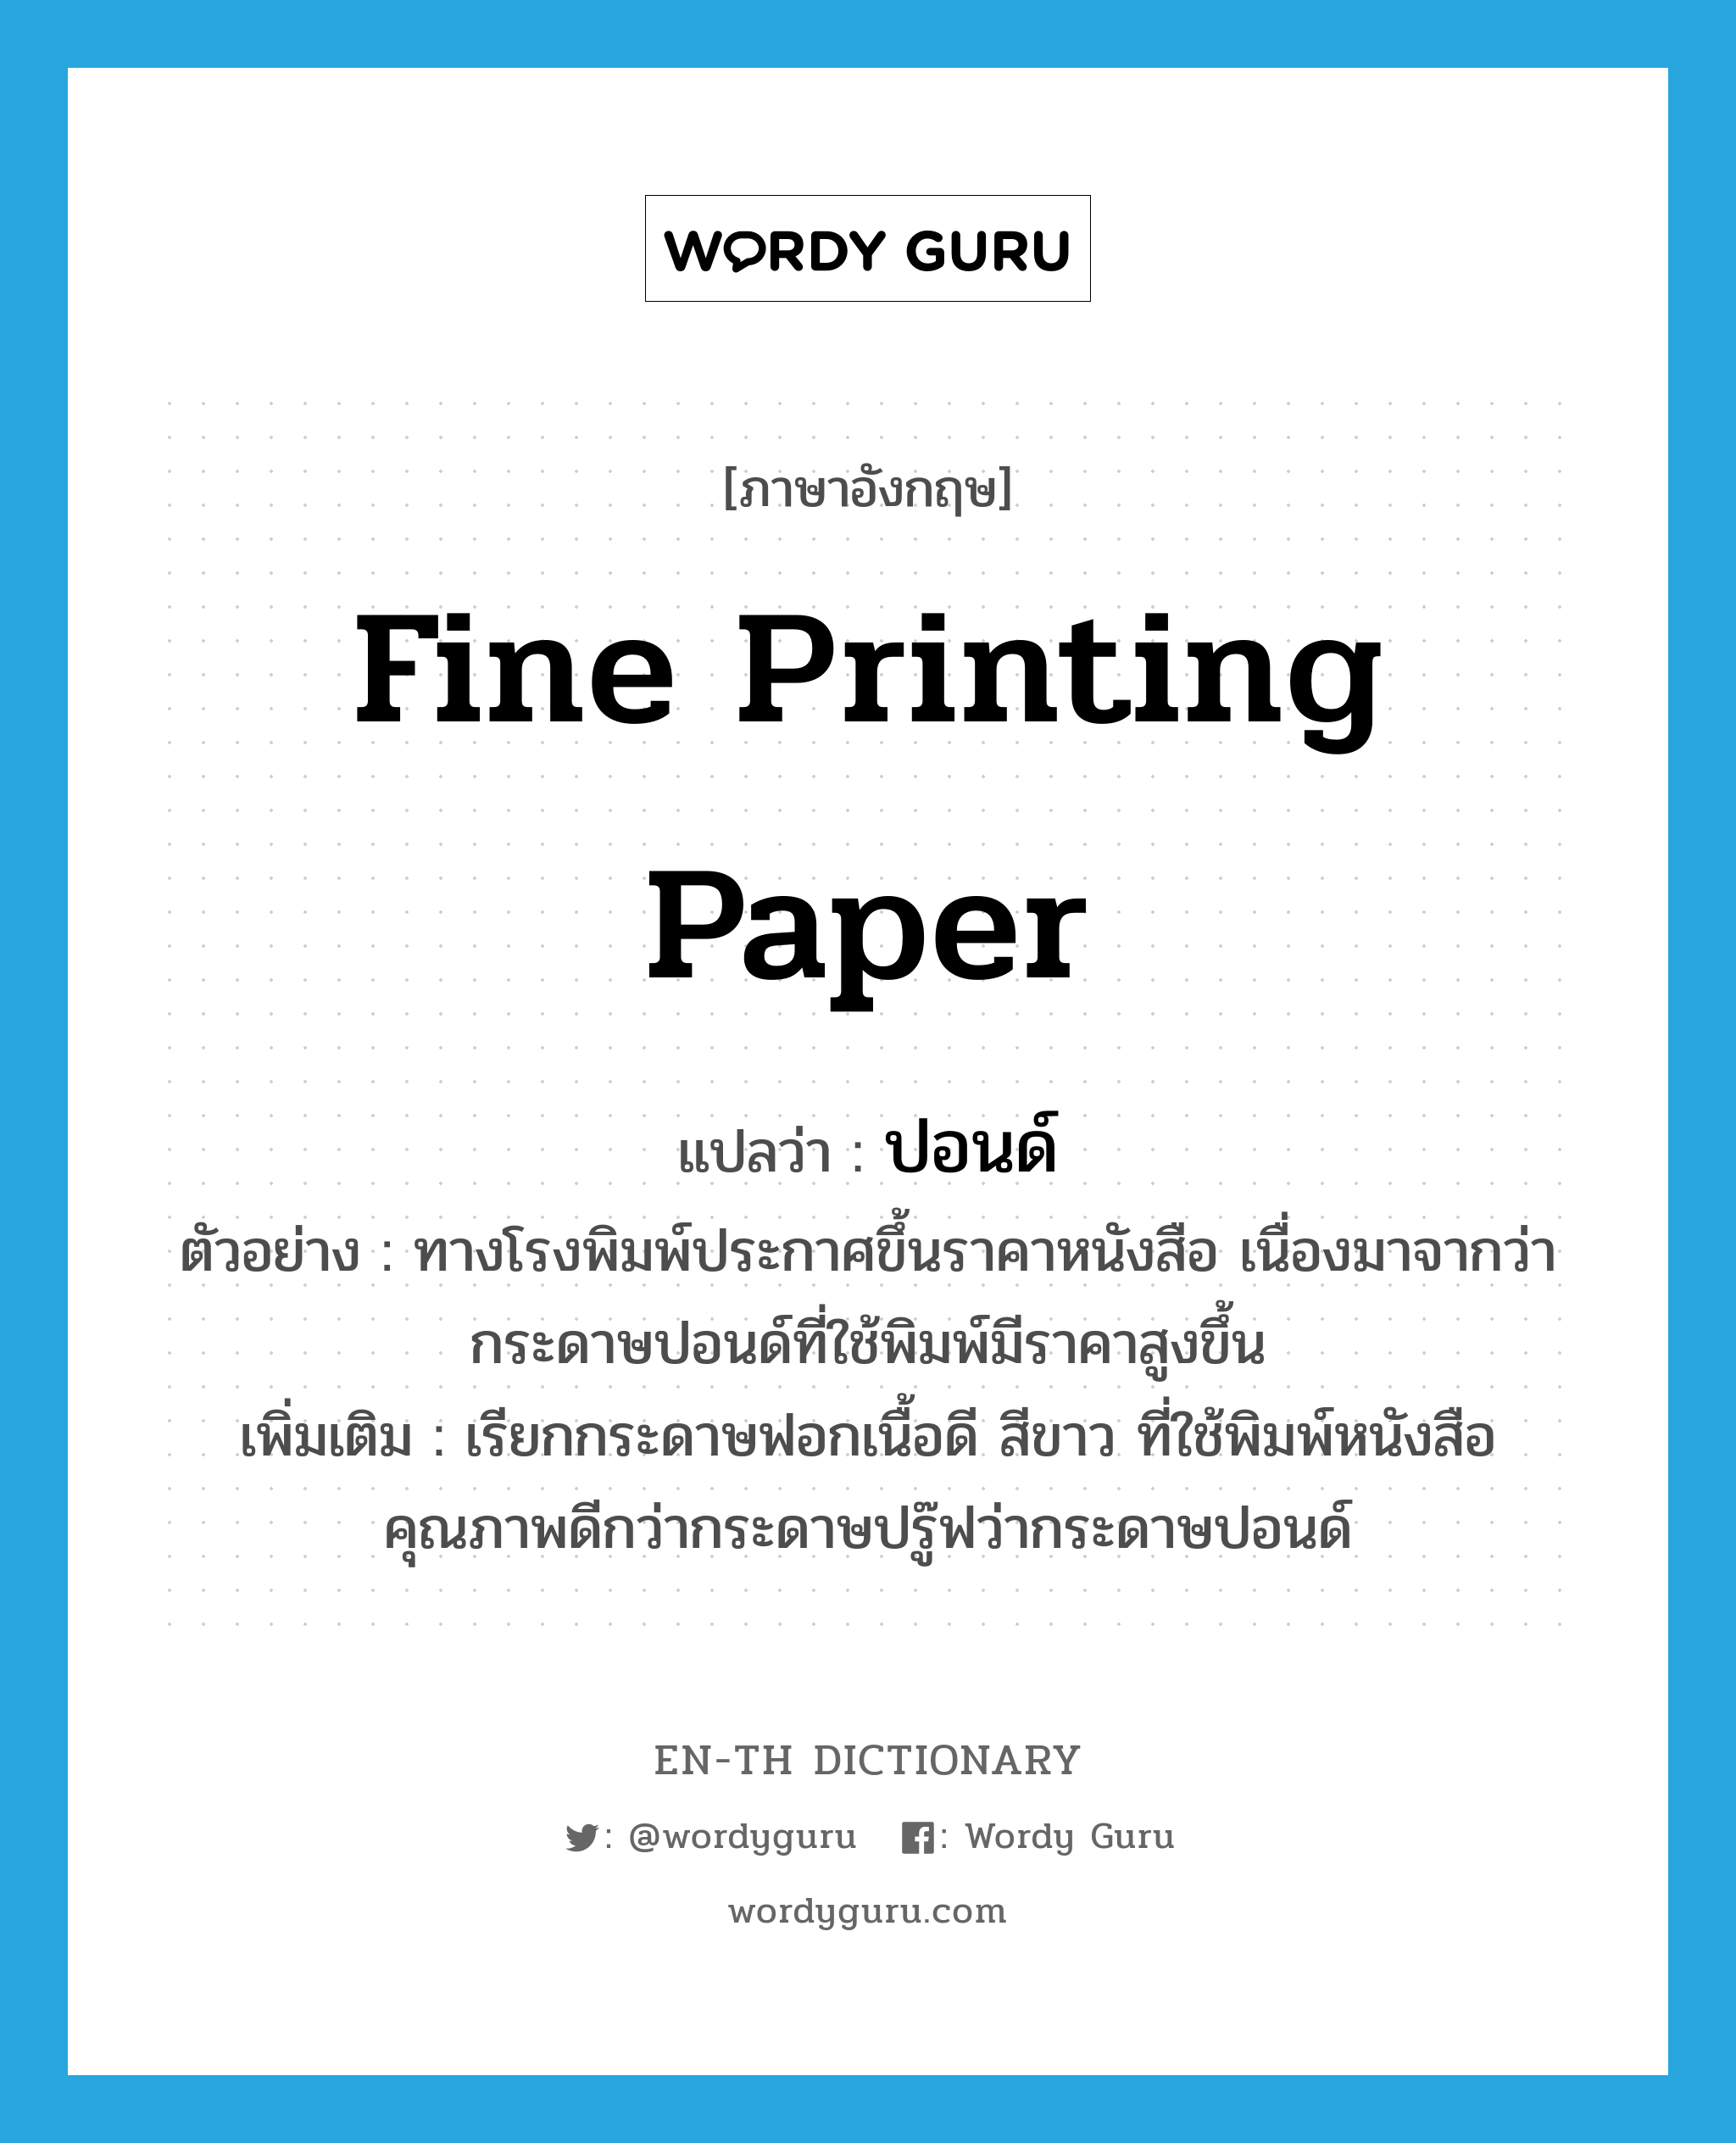 fine printing paper แปลว่า?, คำศัพท์ภาษาอังกฤษ fine printing paper แปลว่า ปอนด์ ประเภท N ตัวอย่าง ทางโรงพิมพ์ประกาศขึ้นราคาหนังสือ เนื่องมาจากว่ากระดาษปอนด์ที่ใช้พิมพ์มีราคาสูงขึ้น เพิ่มเติม เรียกกระดาษฟอกเนื้อดี สีขาว ที่ใช้พิมพ์หนังสือคุณภาพดีกว่ากระดาษปรู๊ฟว่ากระดาษปอนด์ หมวด N